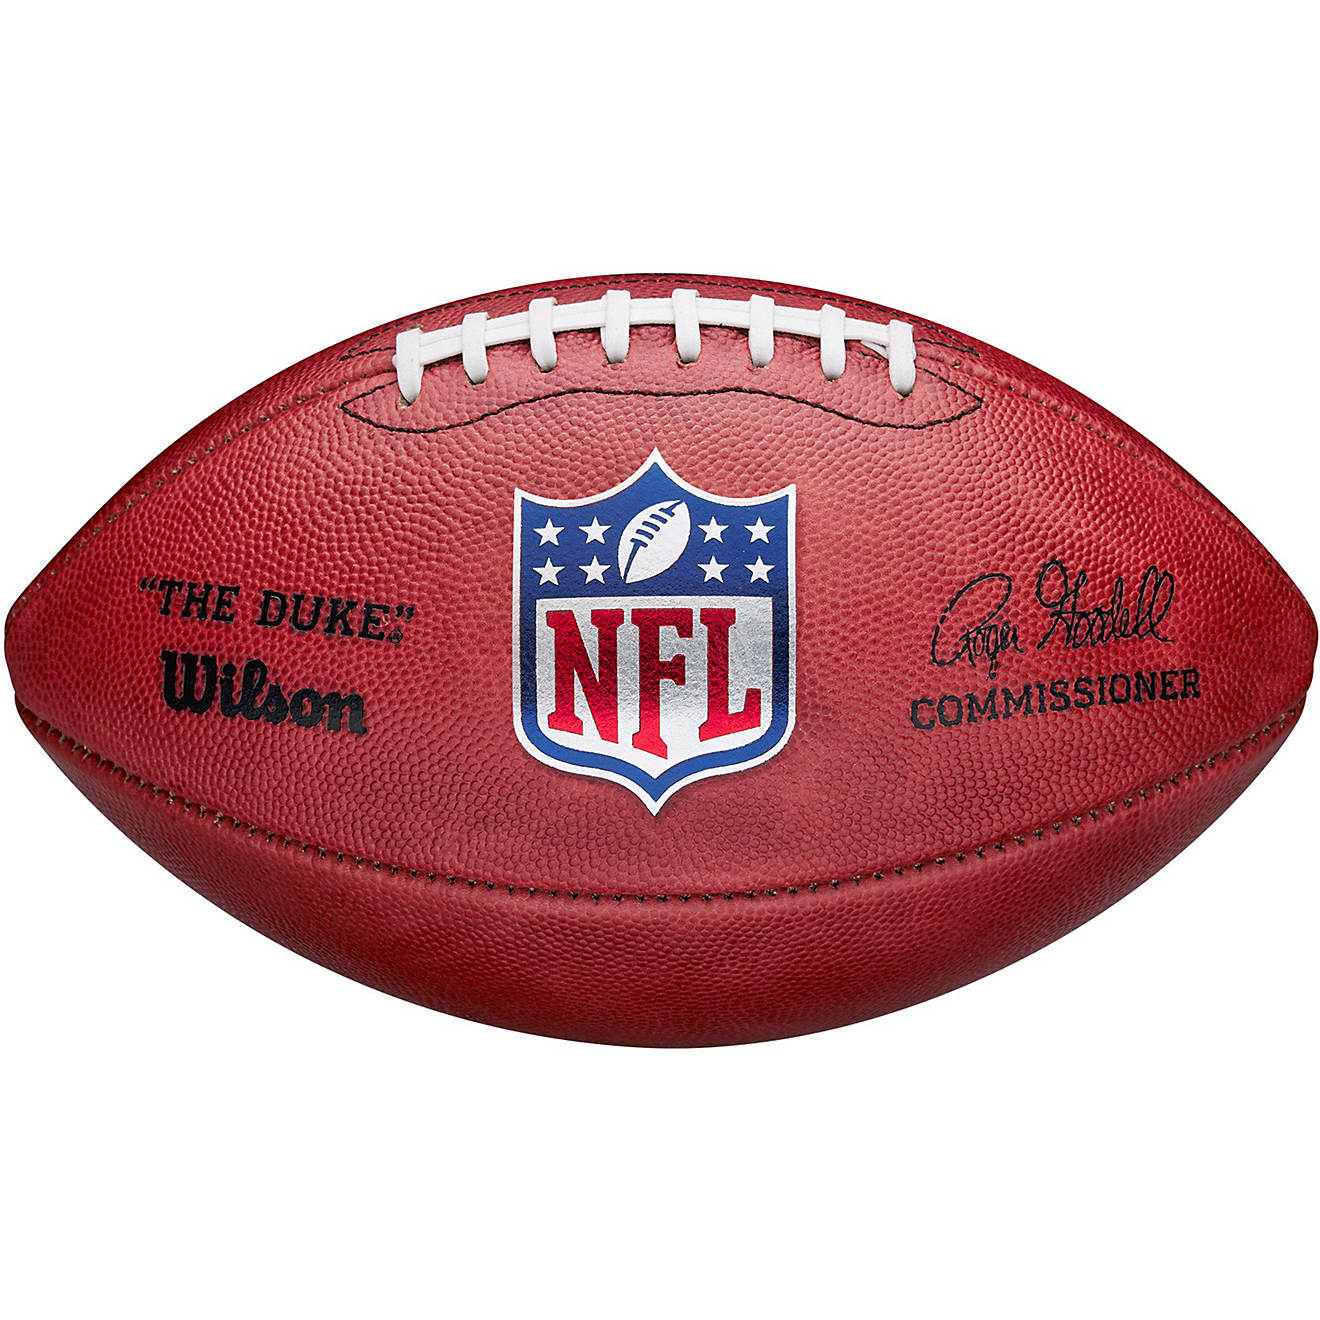 Wilson The Duke NFL Football                                                                                                     - view number 1